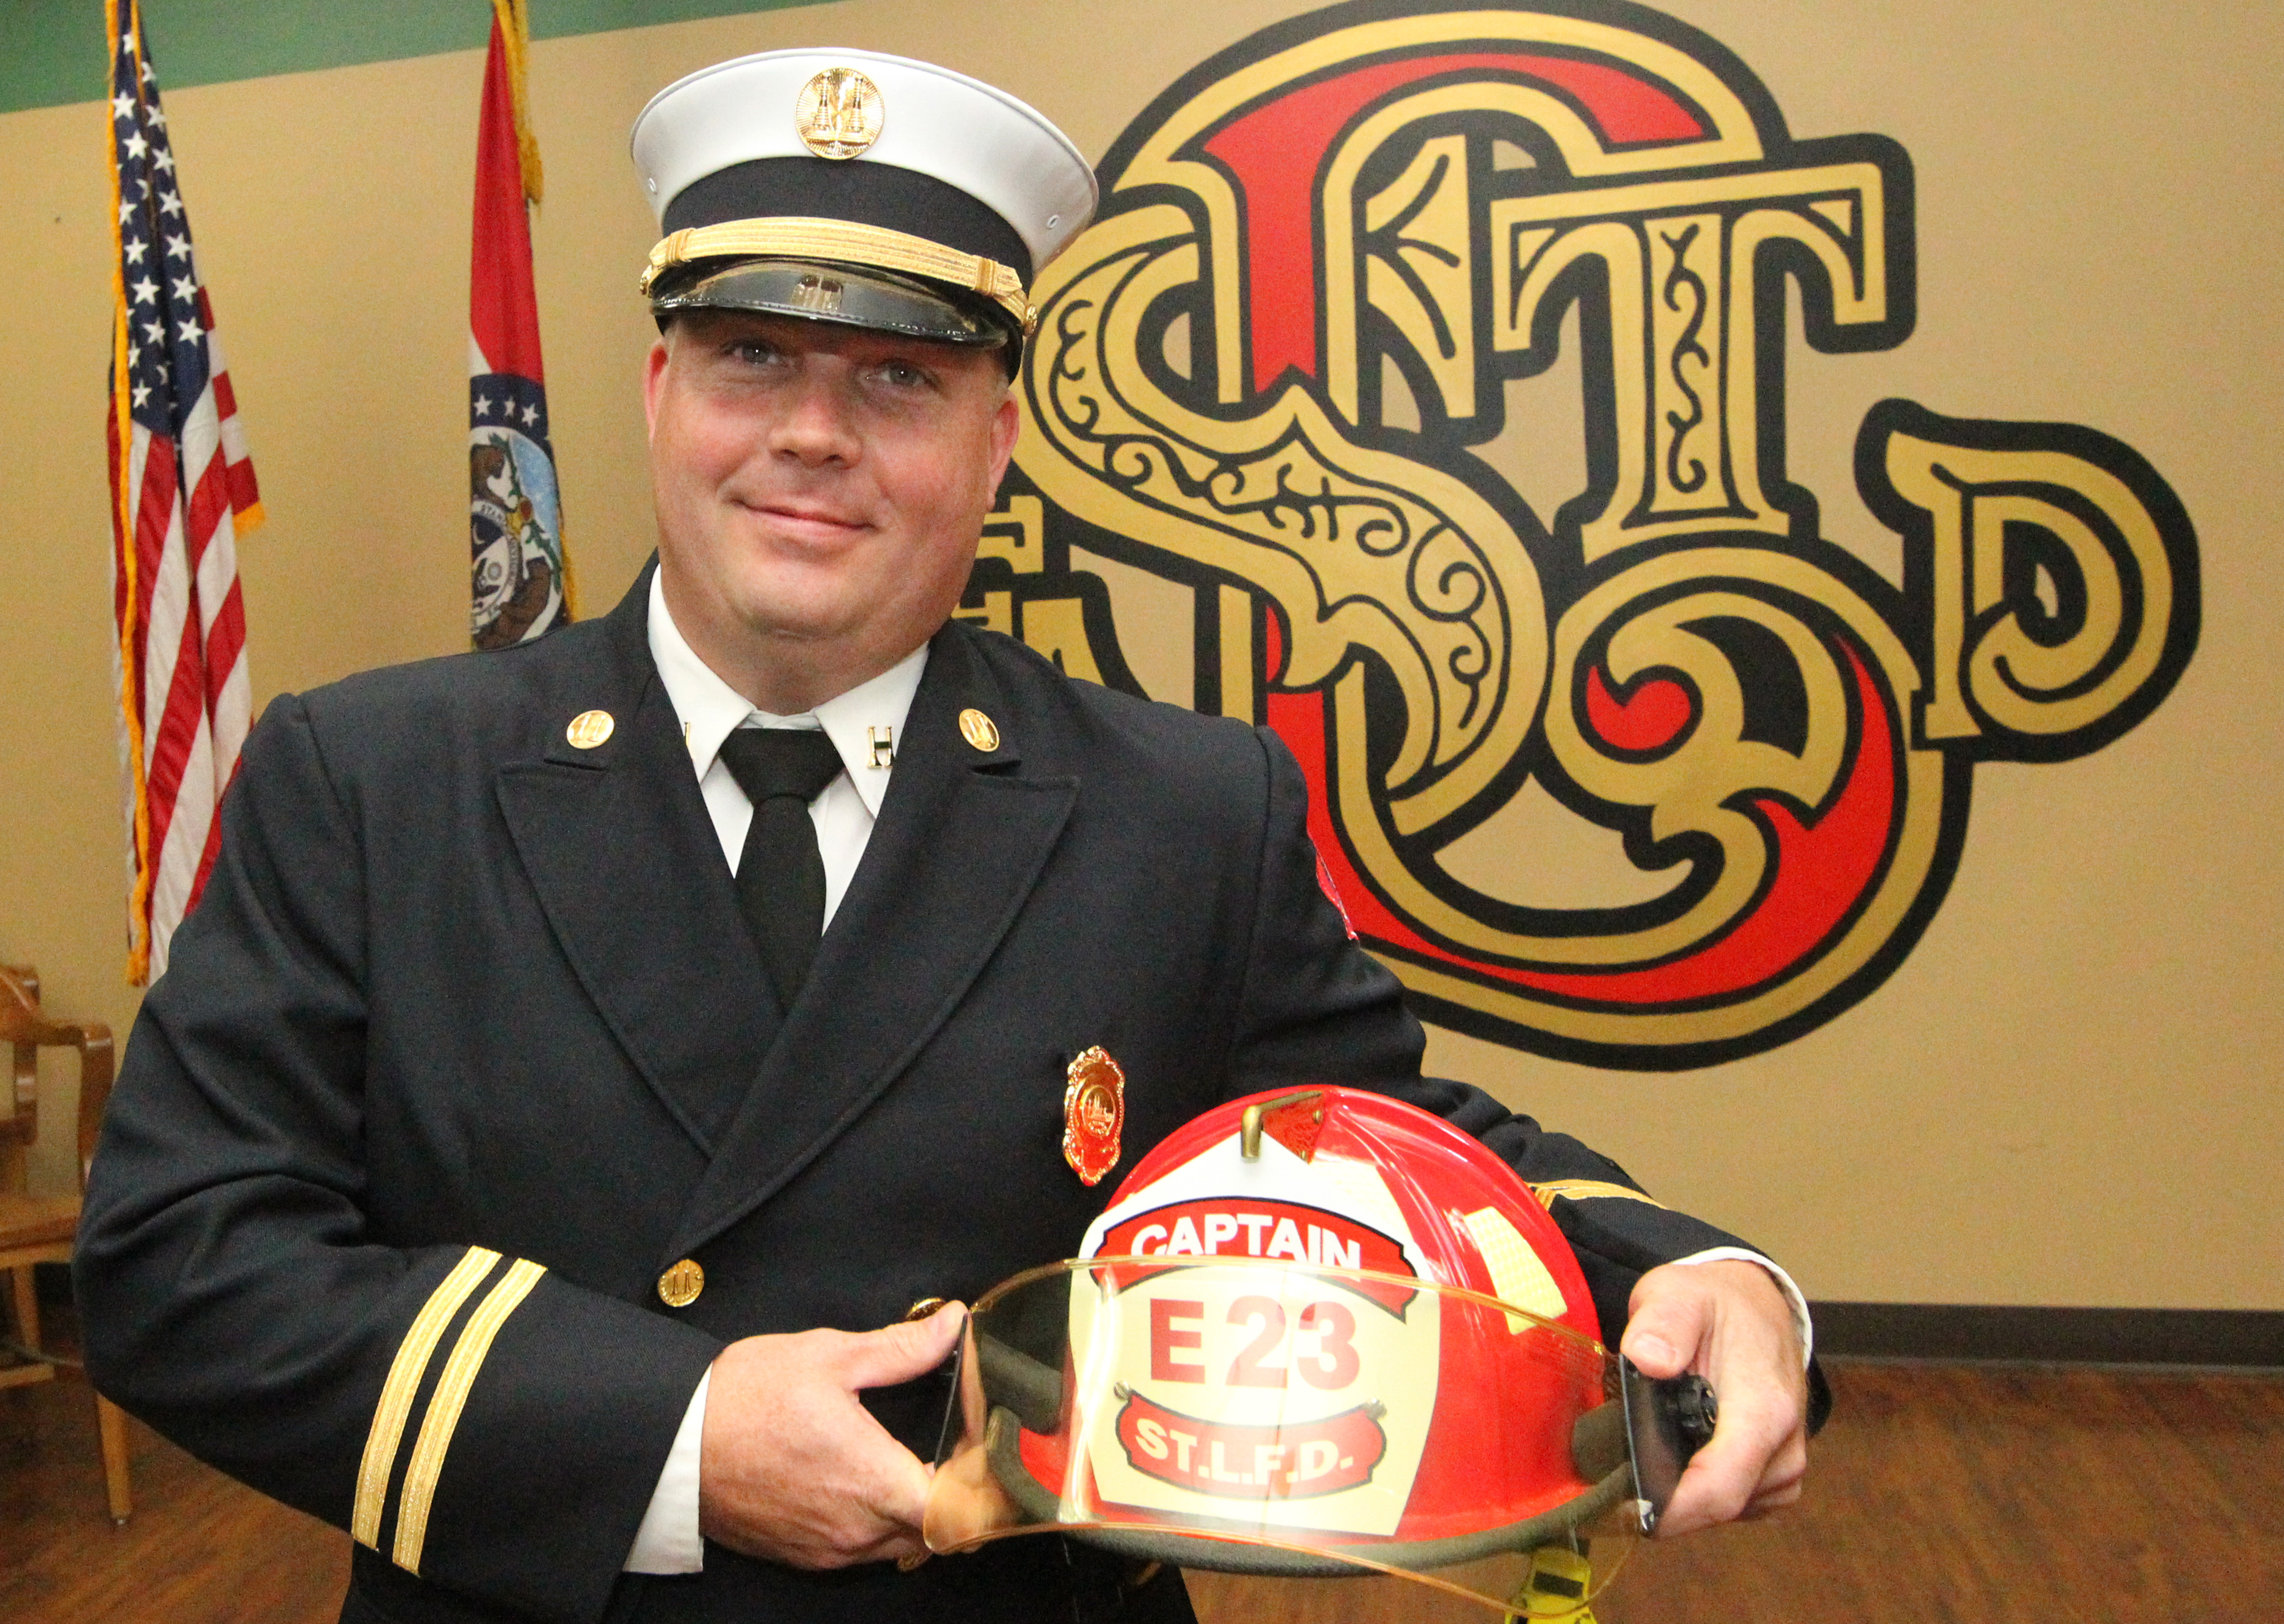 Congratulations Fire Captain Dan Flaherty!